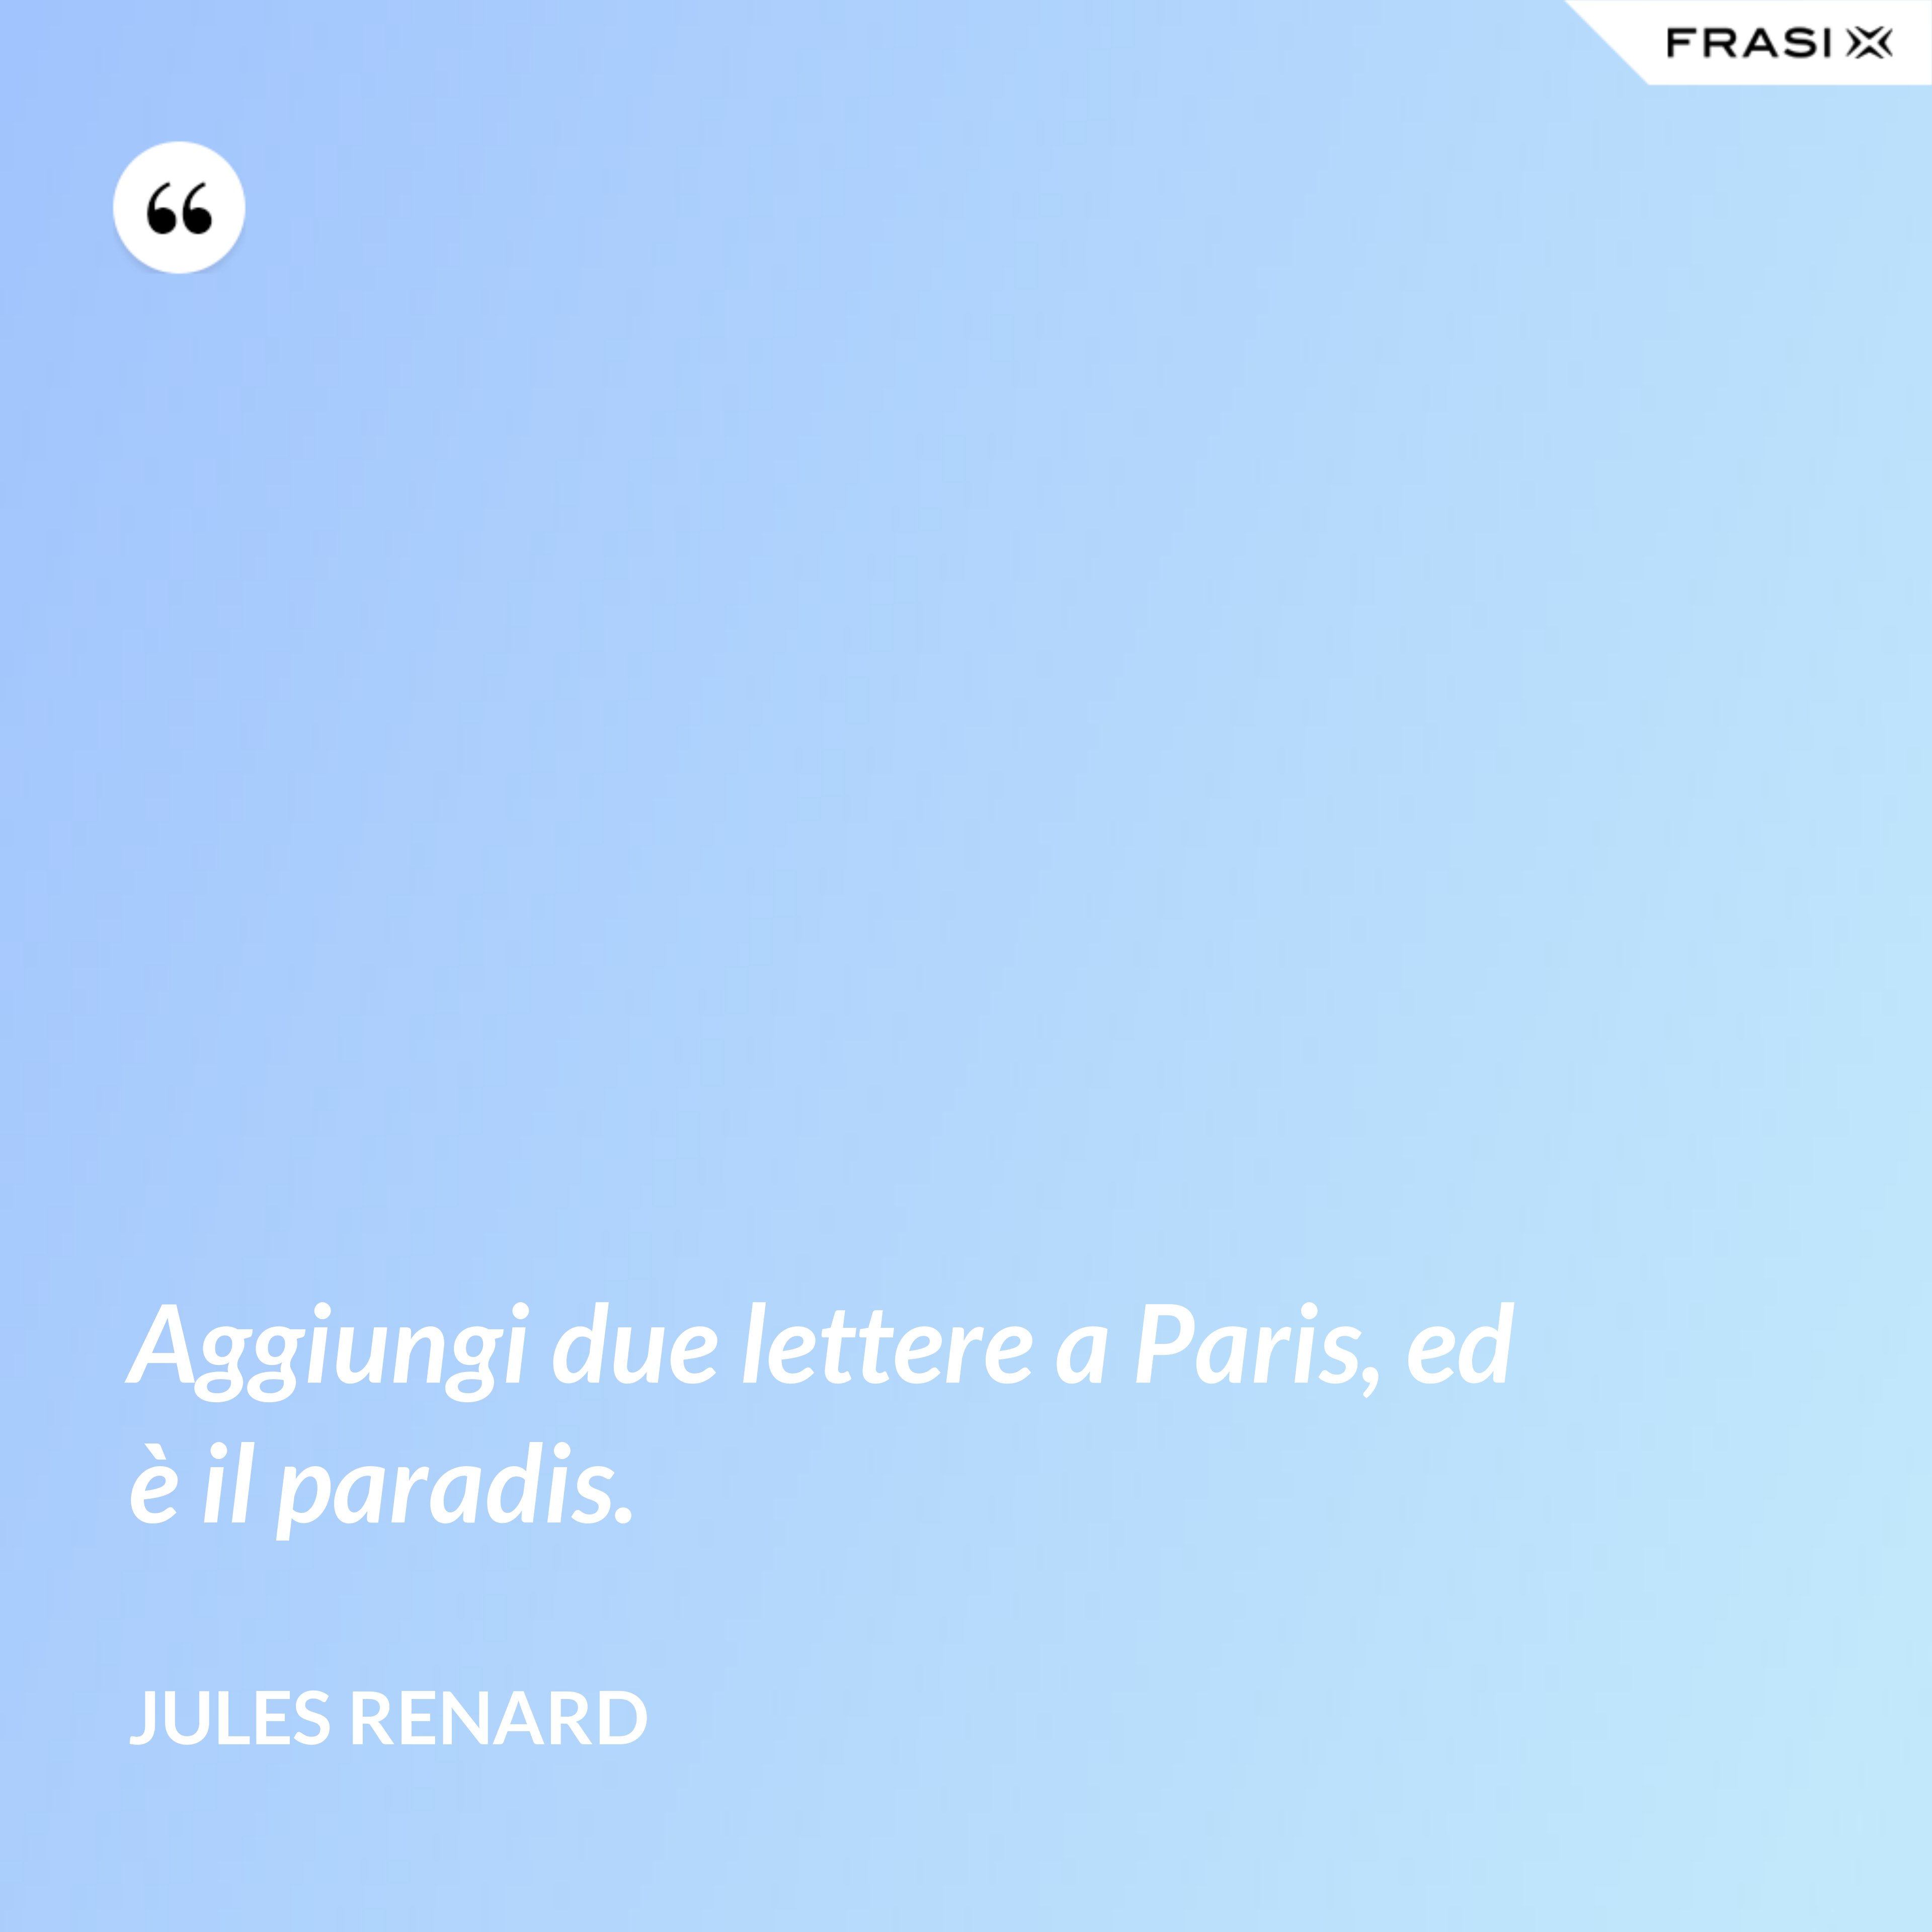 Aggiungi due lettere a Paris, ed è il paradis. - Jules Renard